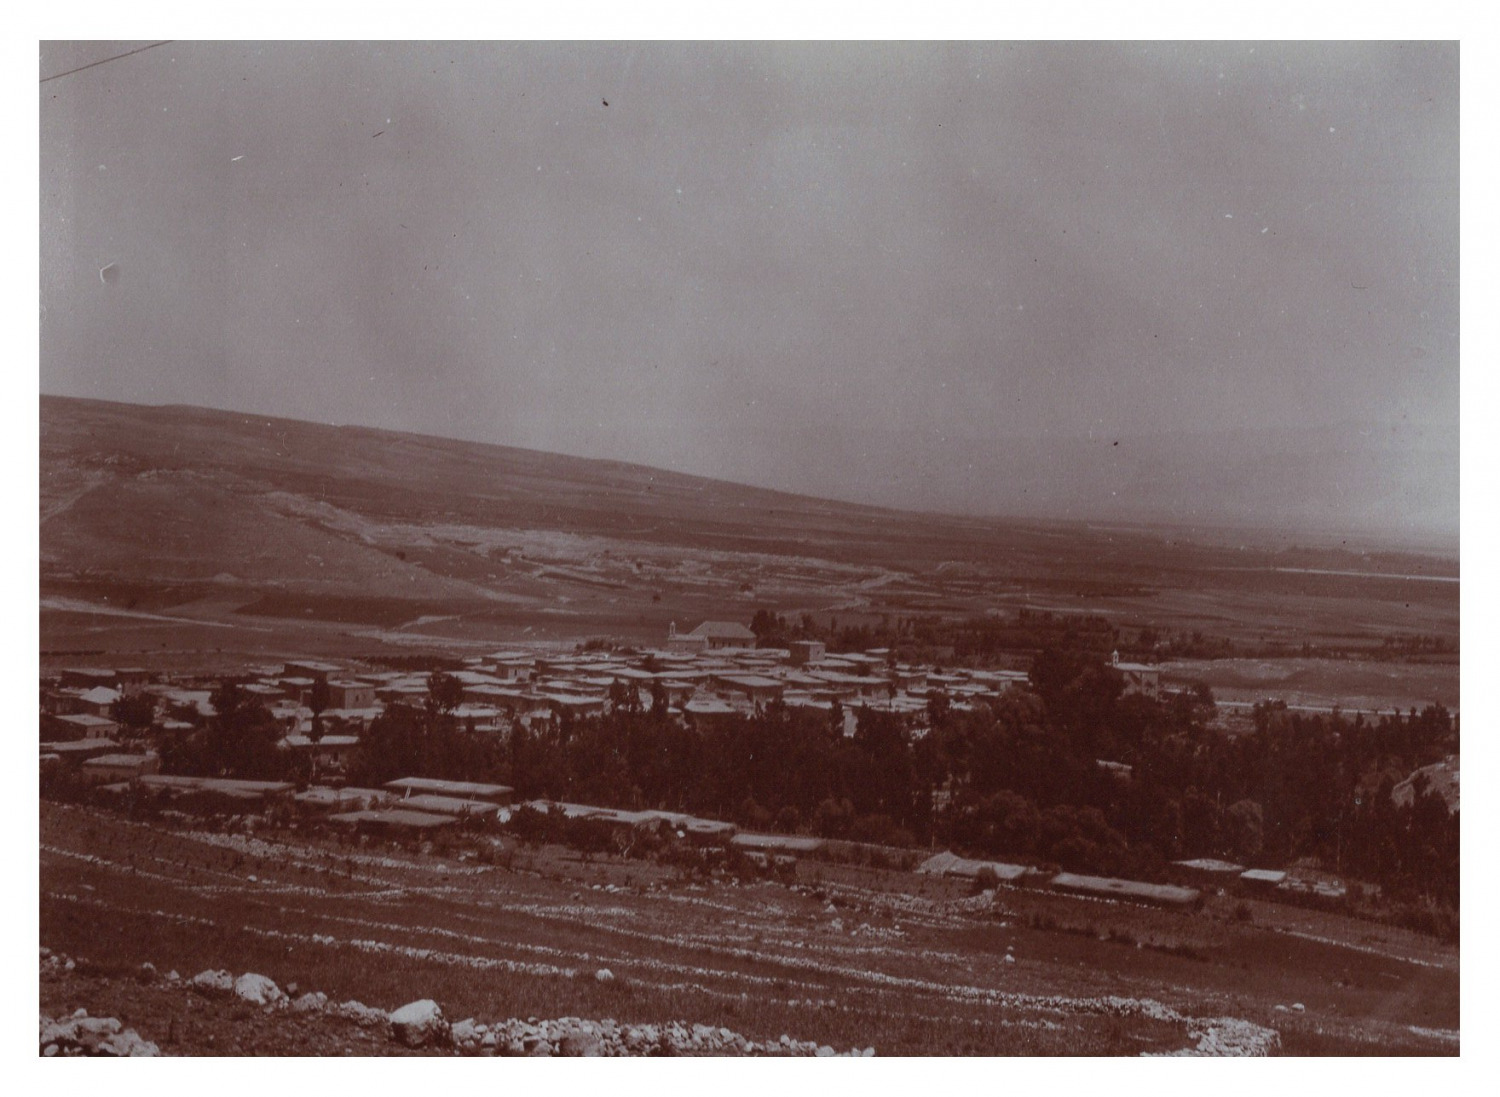 Lebanon, Panoramic View, Vintage Print, circa 1900 Vintage Print Legended 